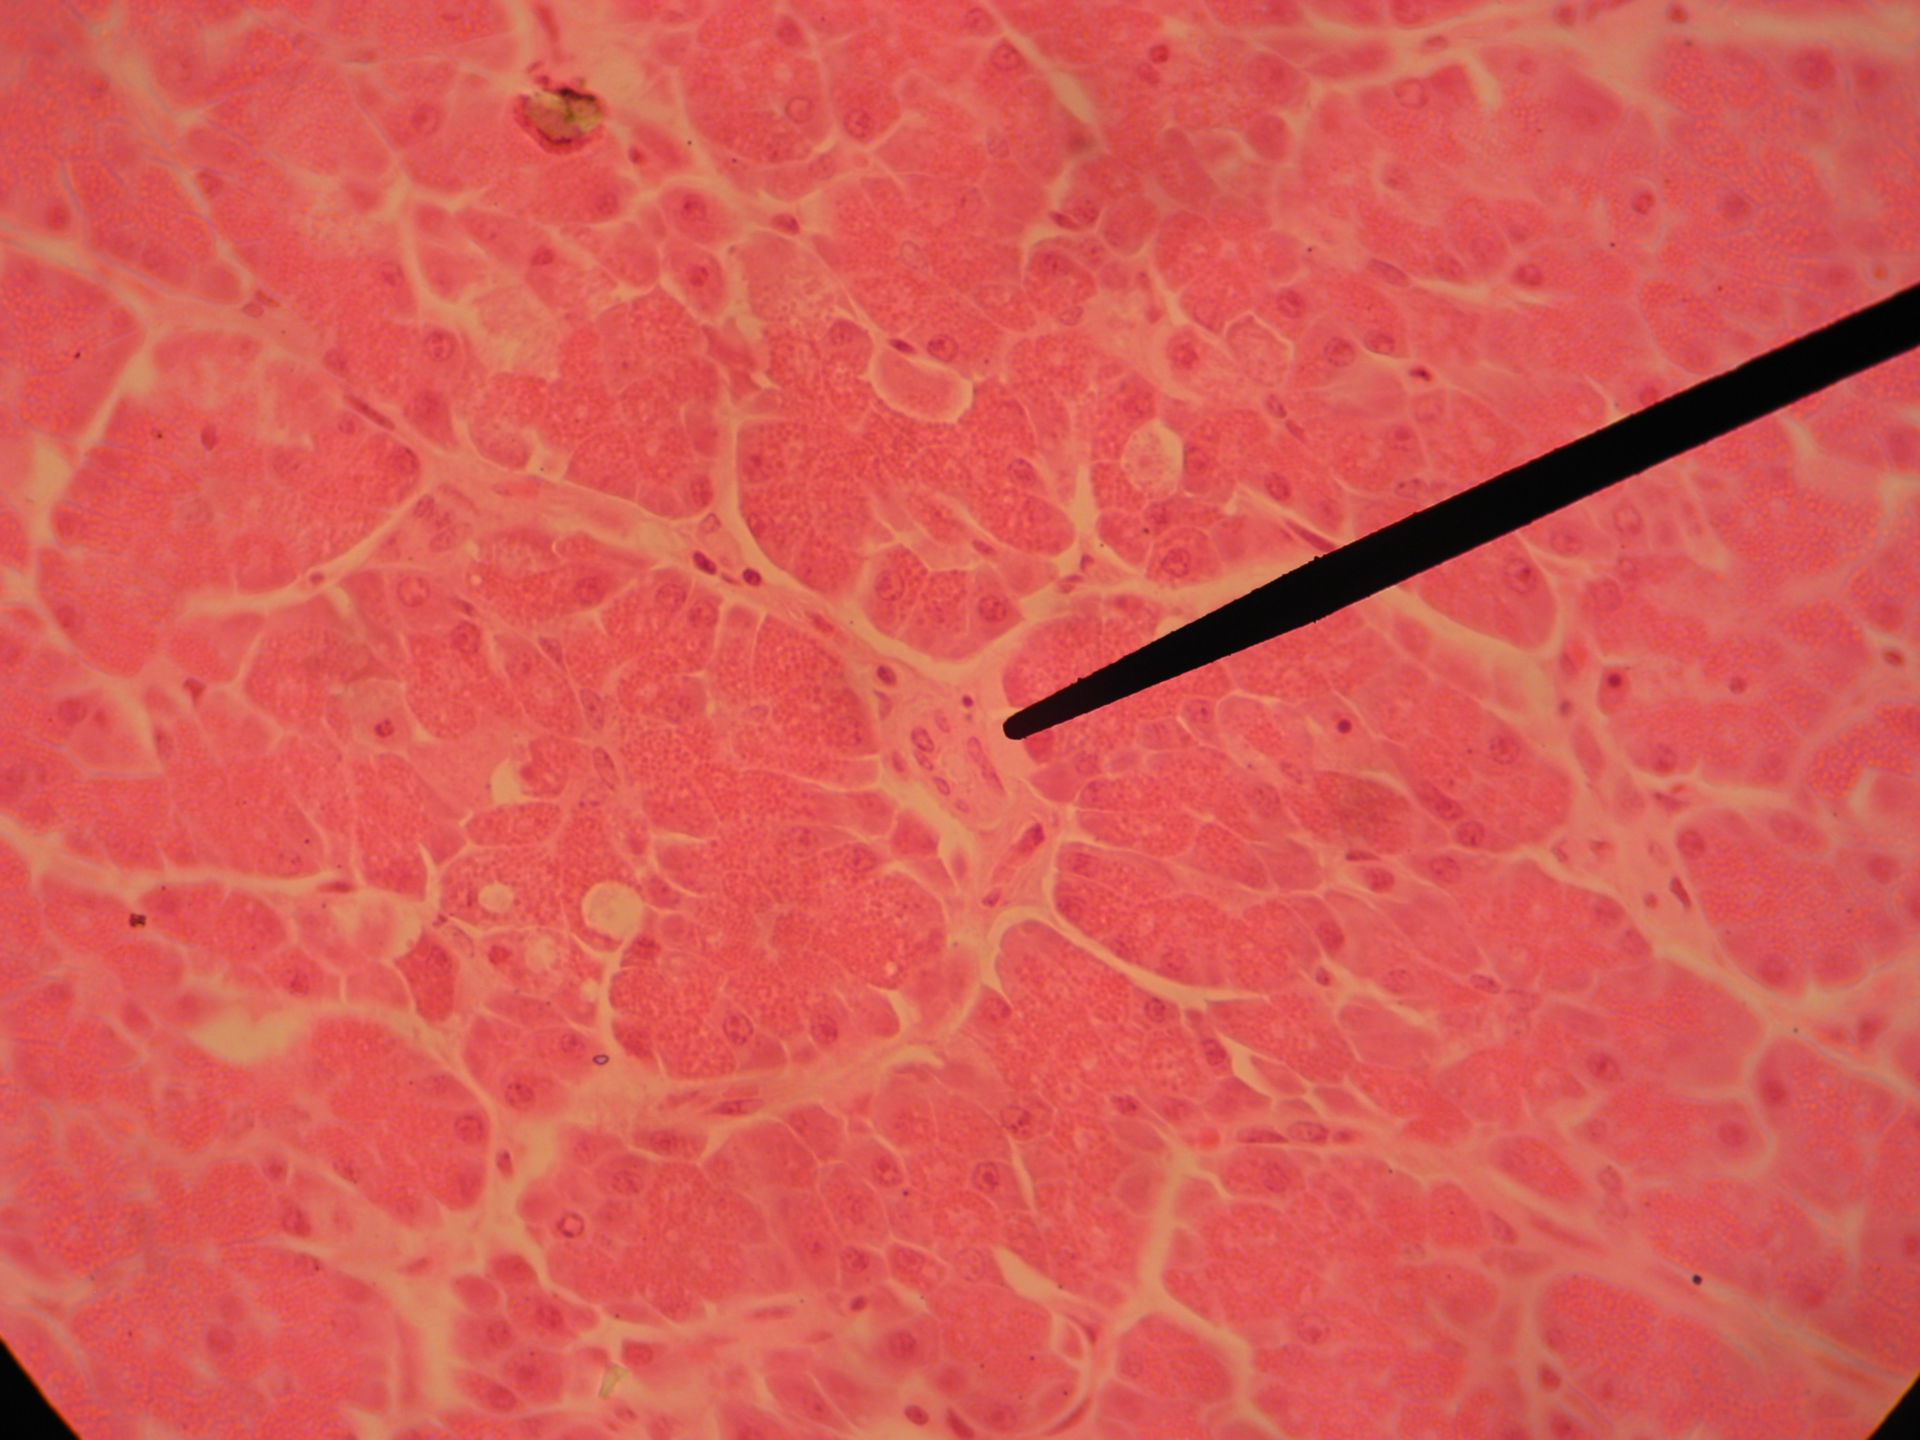 Pankreas des Schafes (2) - Ductulus intralobularis